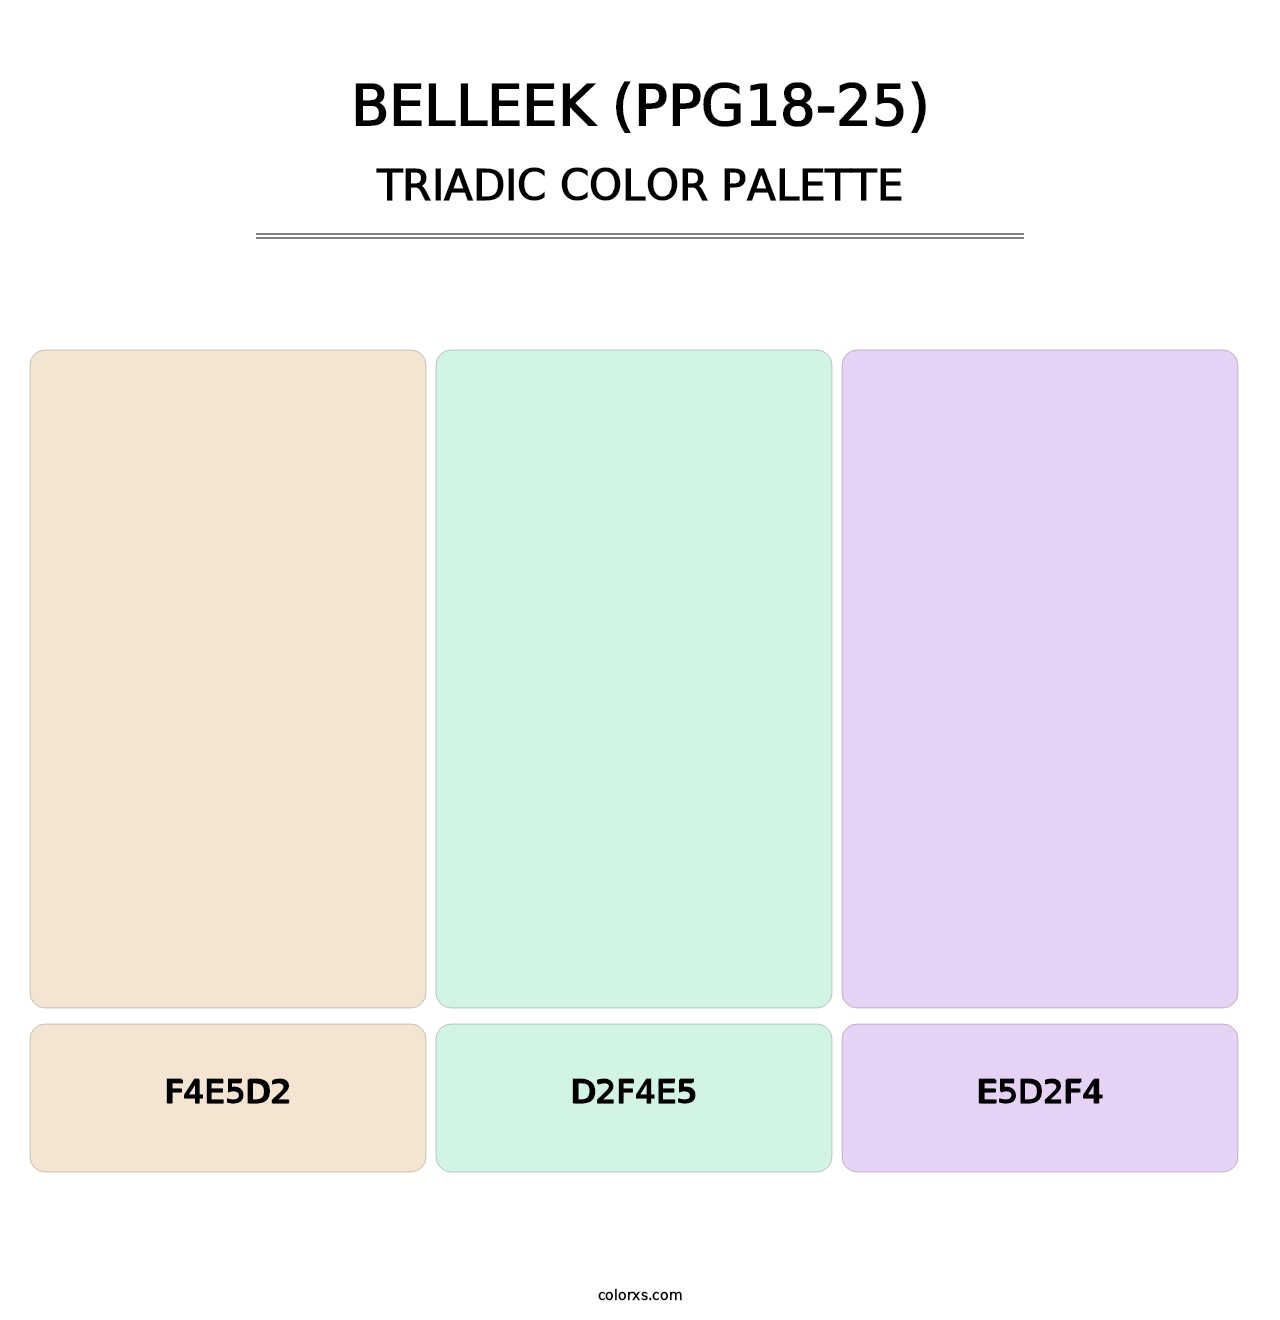 Belleek (PPG18-25) - Triadic Color Palette